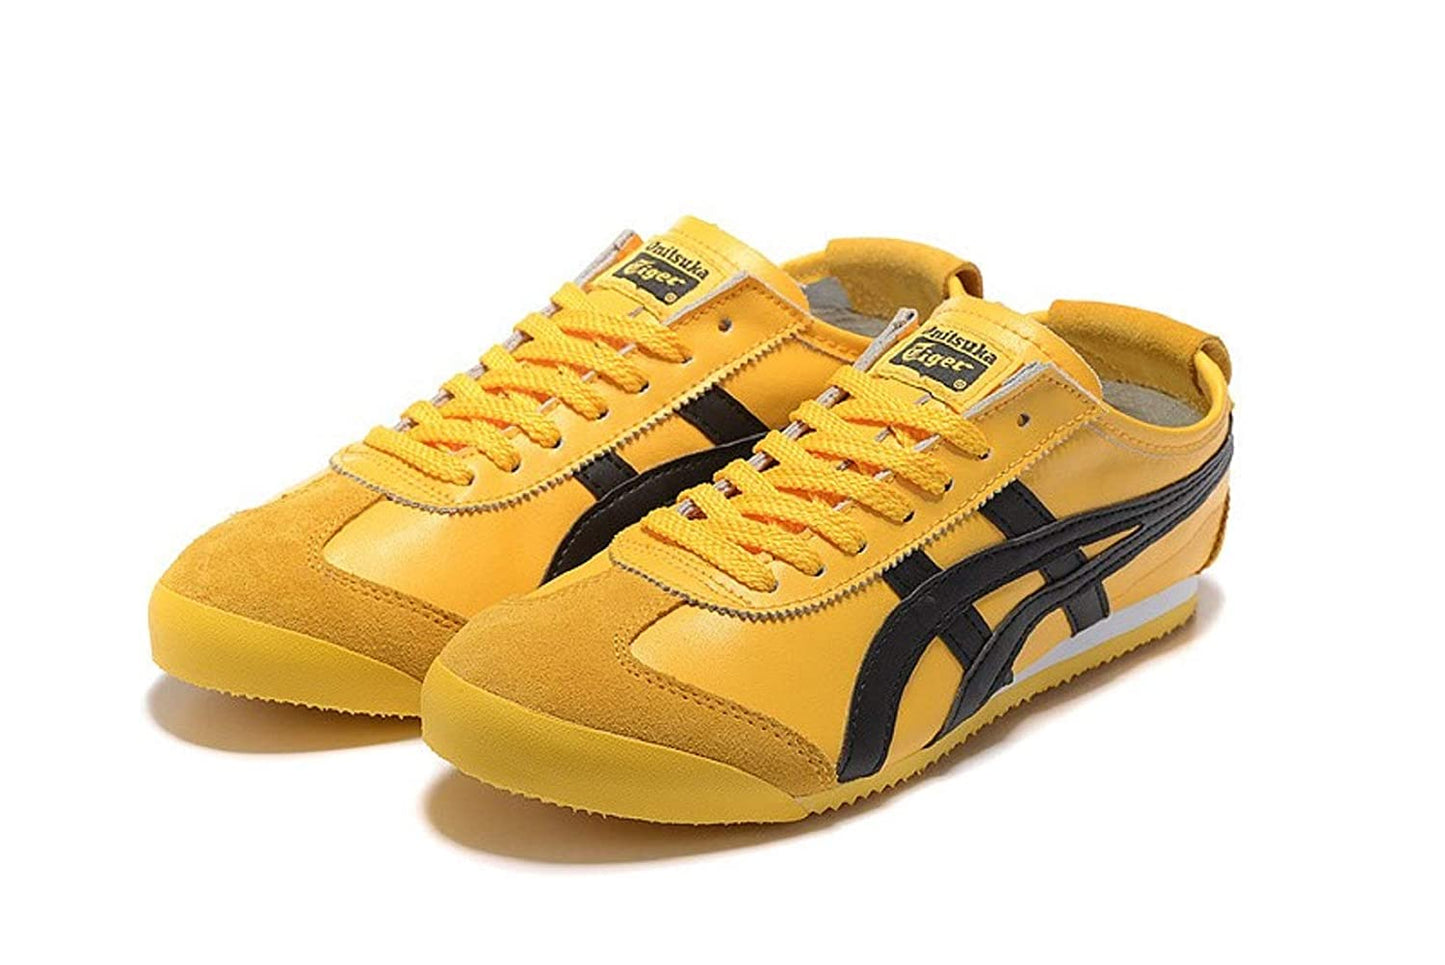 ASICS Onitsuka Tiger Mexico 66 Shoes (Yellow/Black)